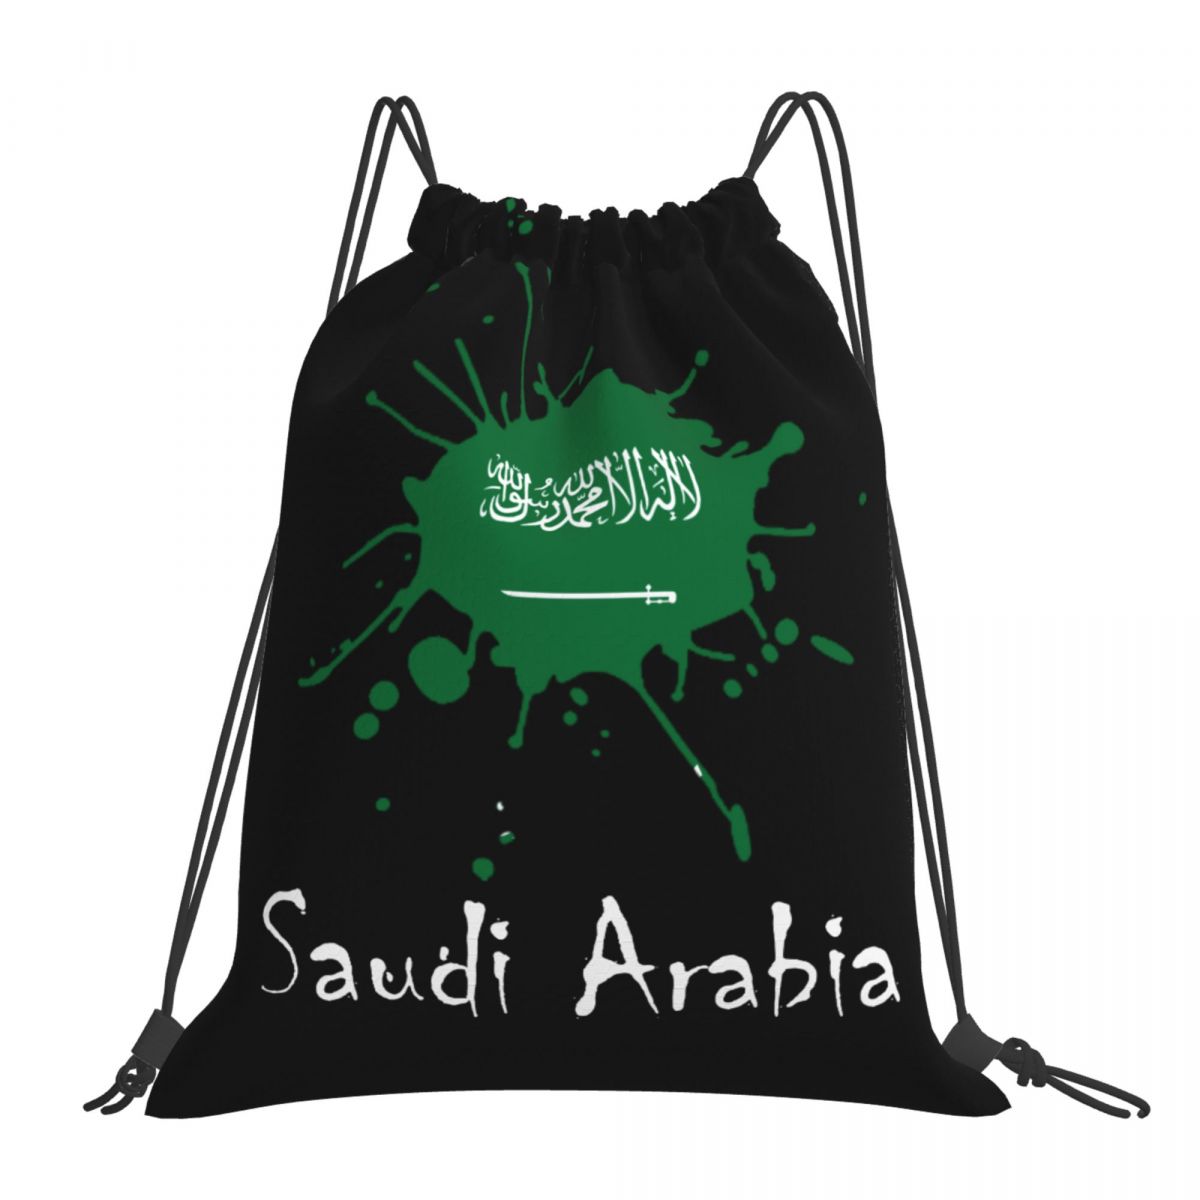 Saudi Arabia Ink Spatter Drawstring Bags for School Gym